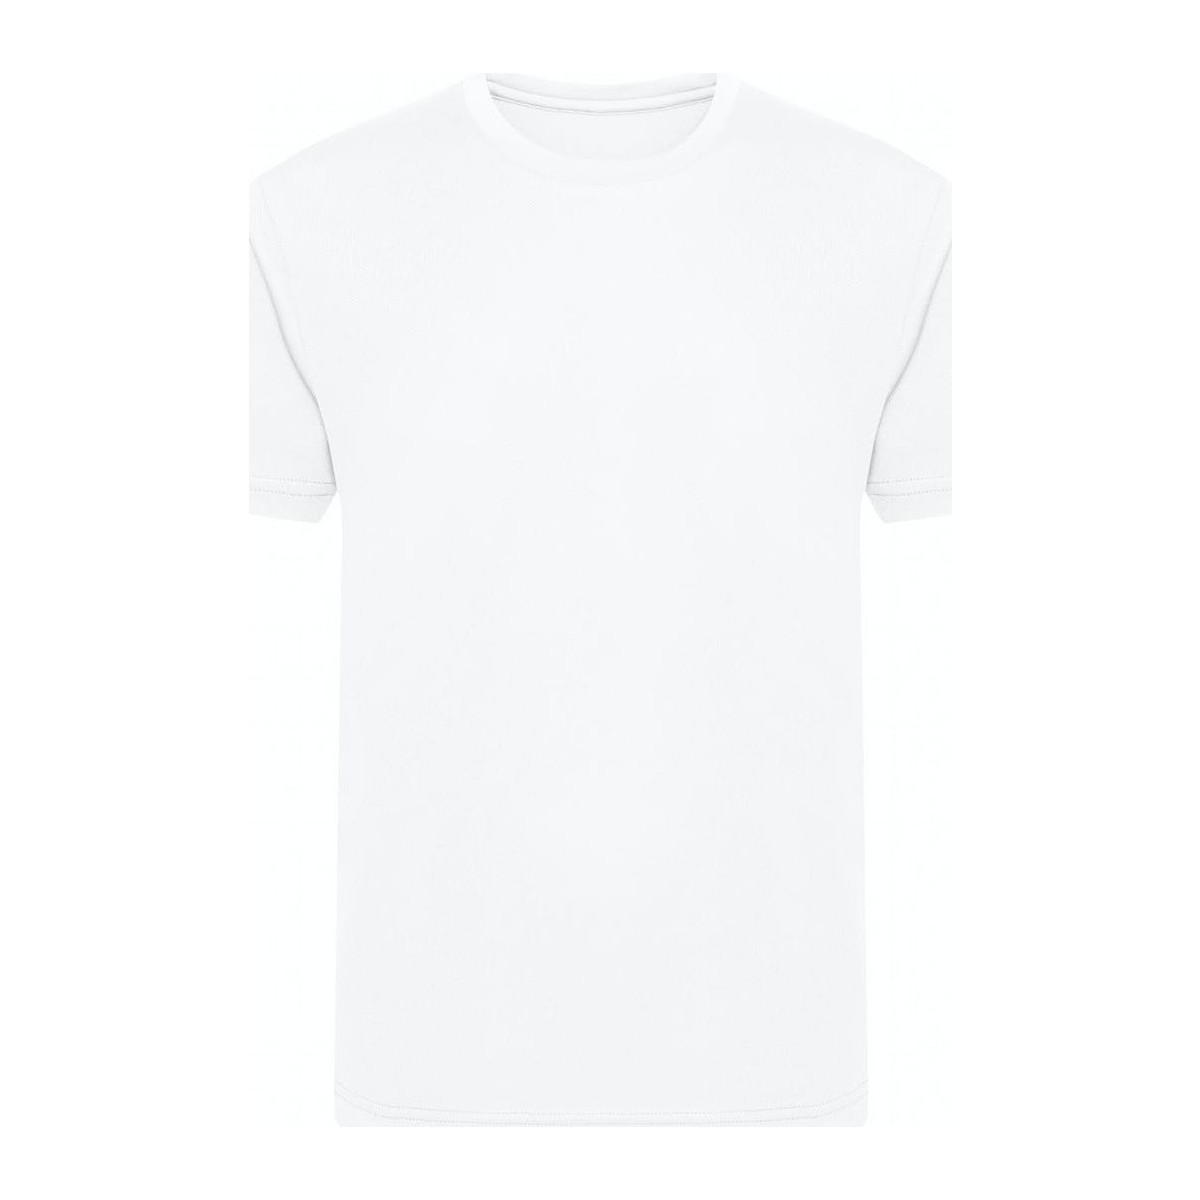 textil Niños Camisetas manga larga Awdis Cool Blanco